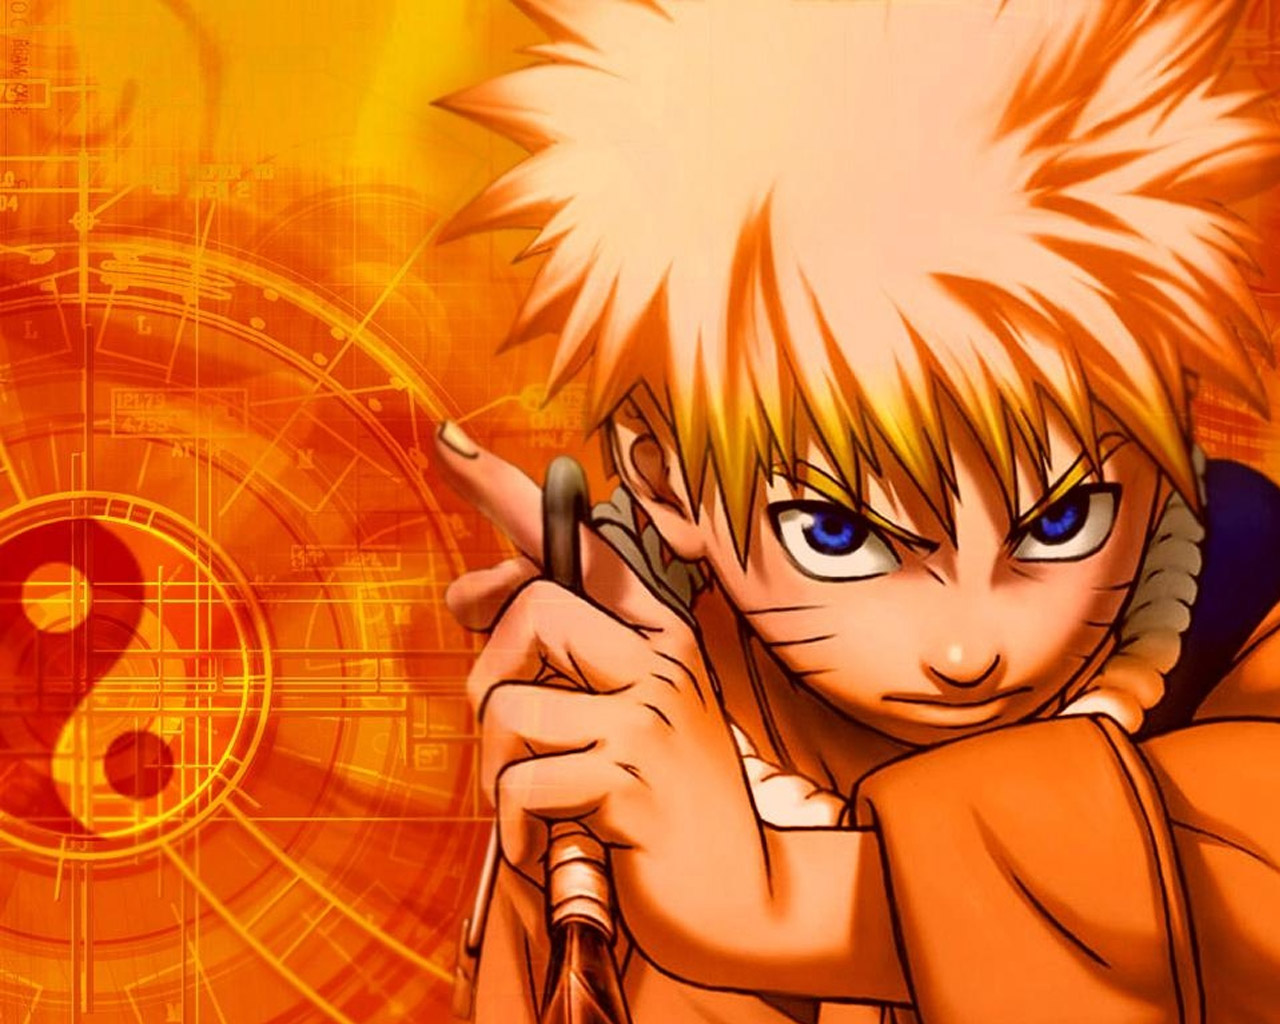 Detonado Naruto Ultimate Ninja 5 como desbloquear sasuke (classico) e o 4°  hokage Parte 5 HD 